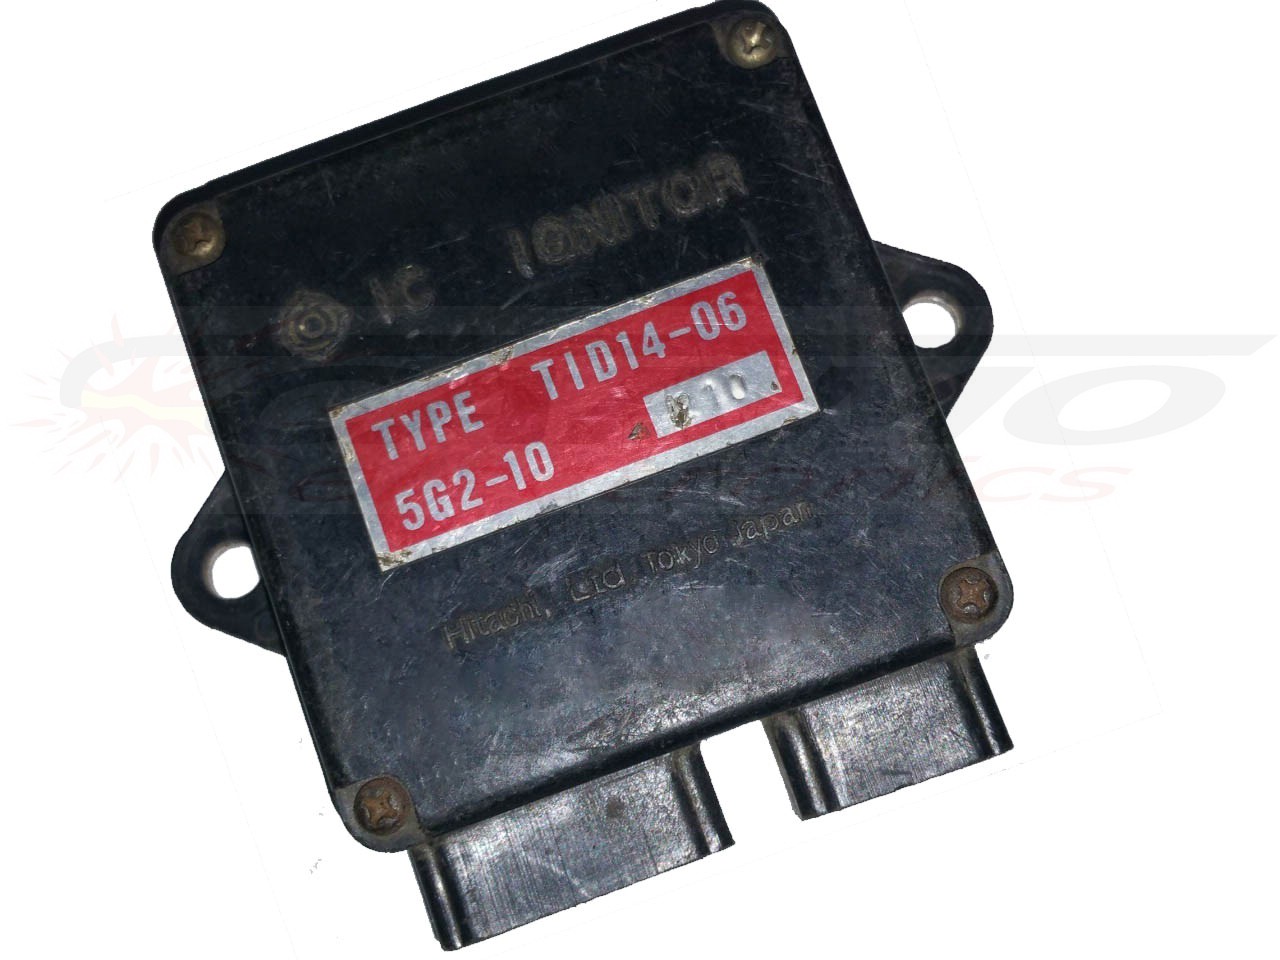 XJ650 XJ750 11M TCI CDI dispositif de commande boîte noire (TID14-06, 5G2-10)